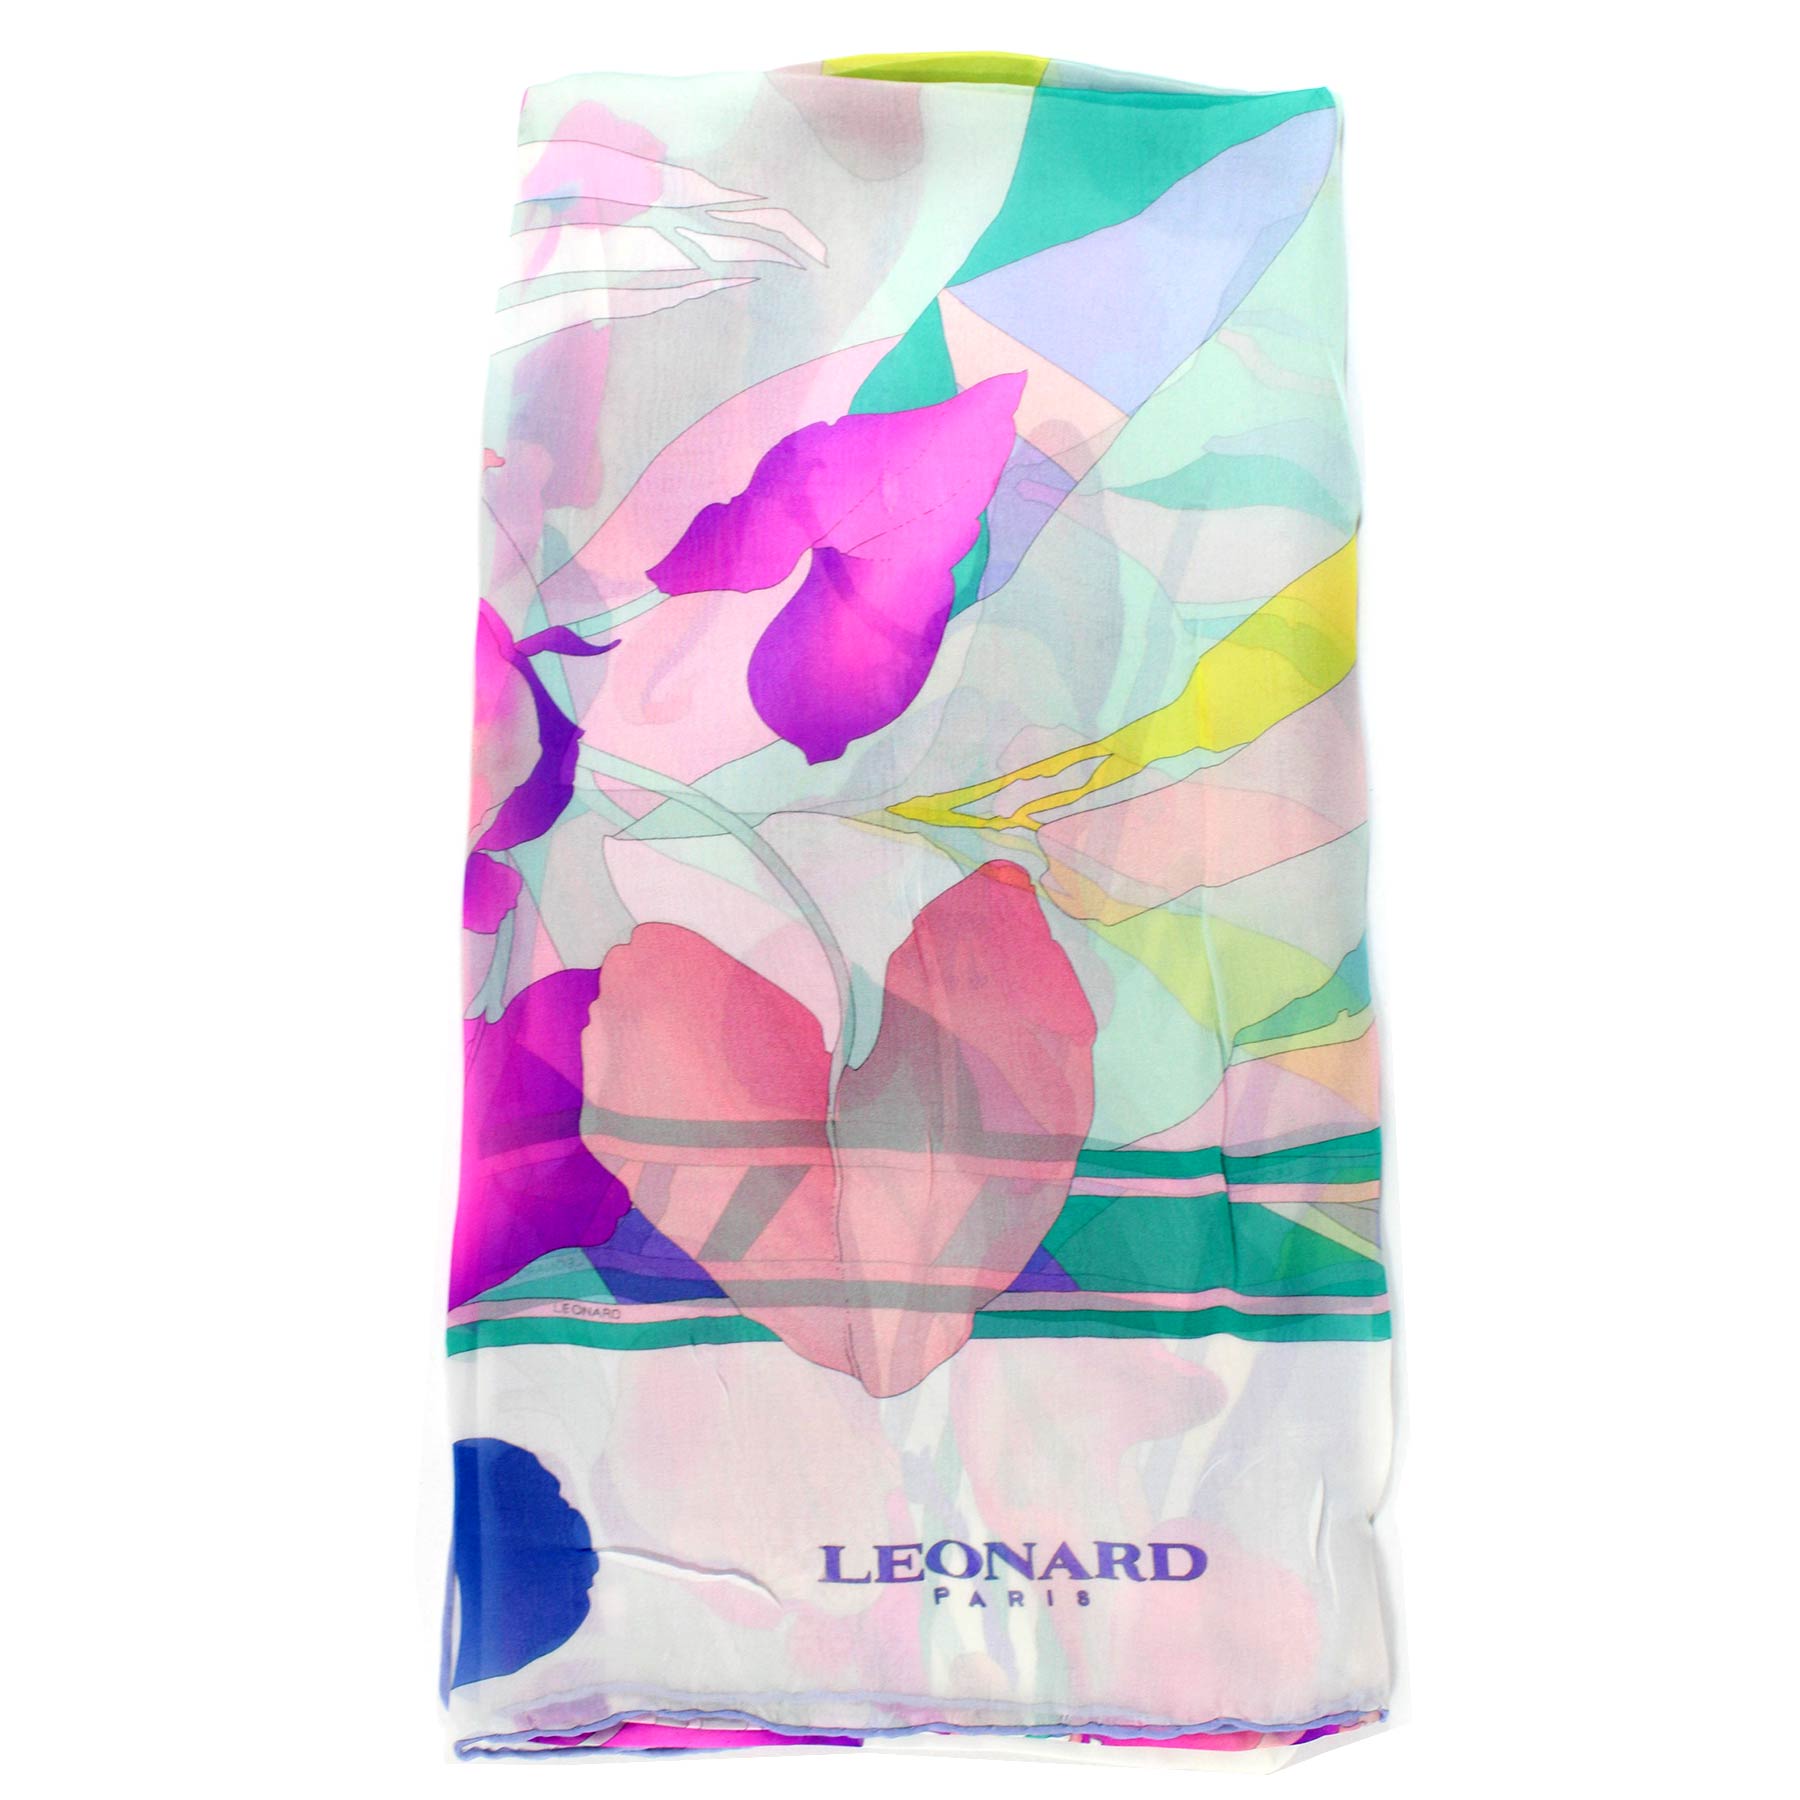 Leonard Paris Scarf Turquoise Pink Floral - Chiffon Silk Shawl